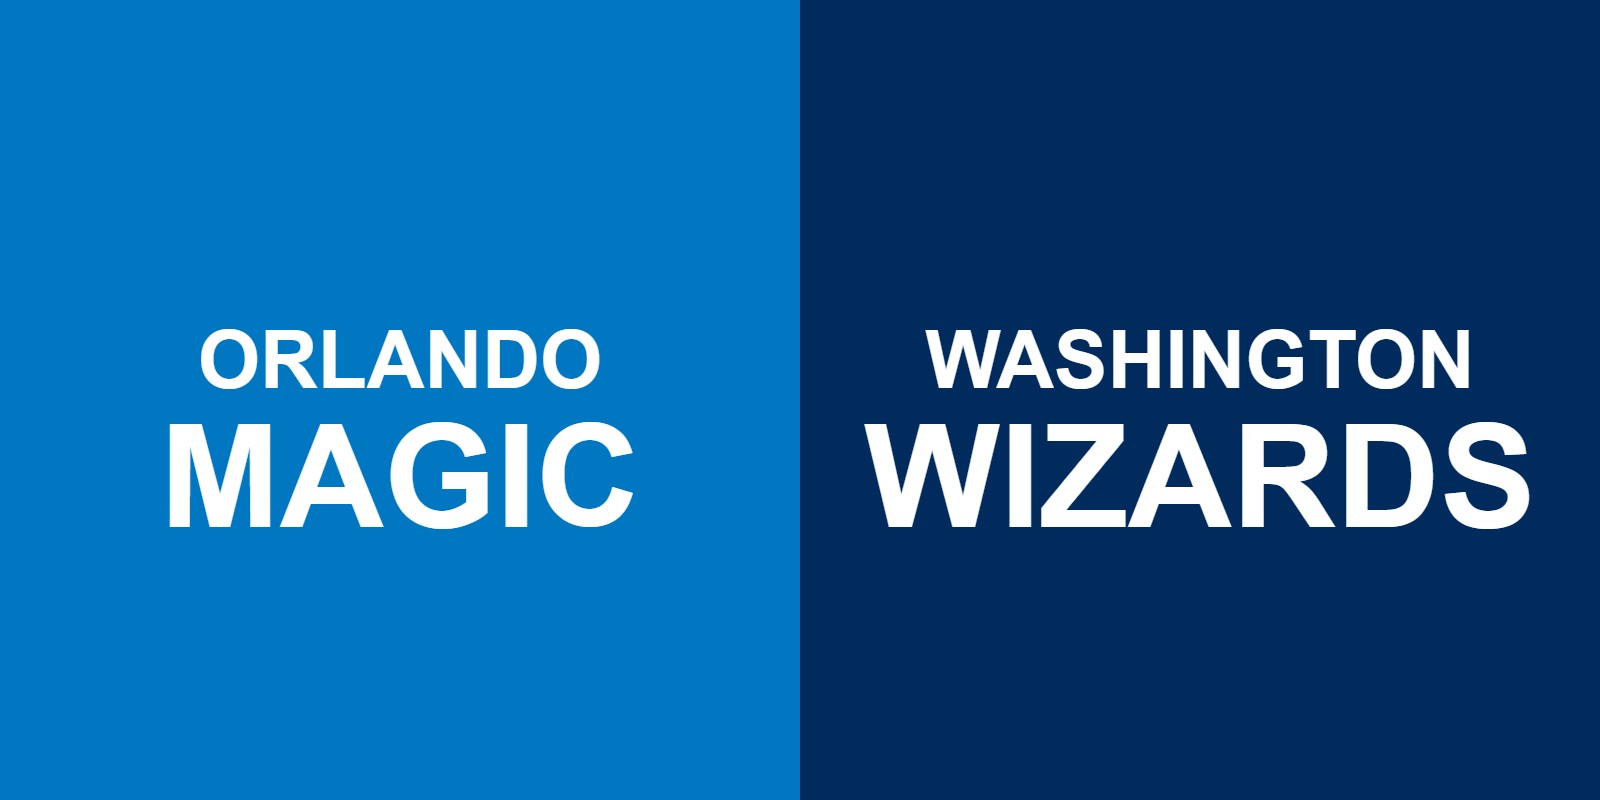 Magic vs Wizards